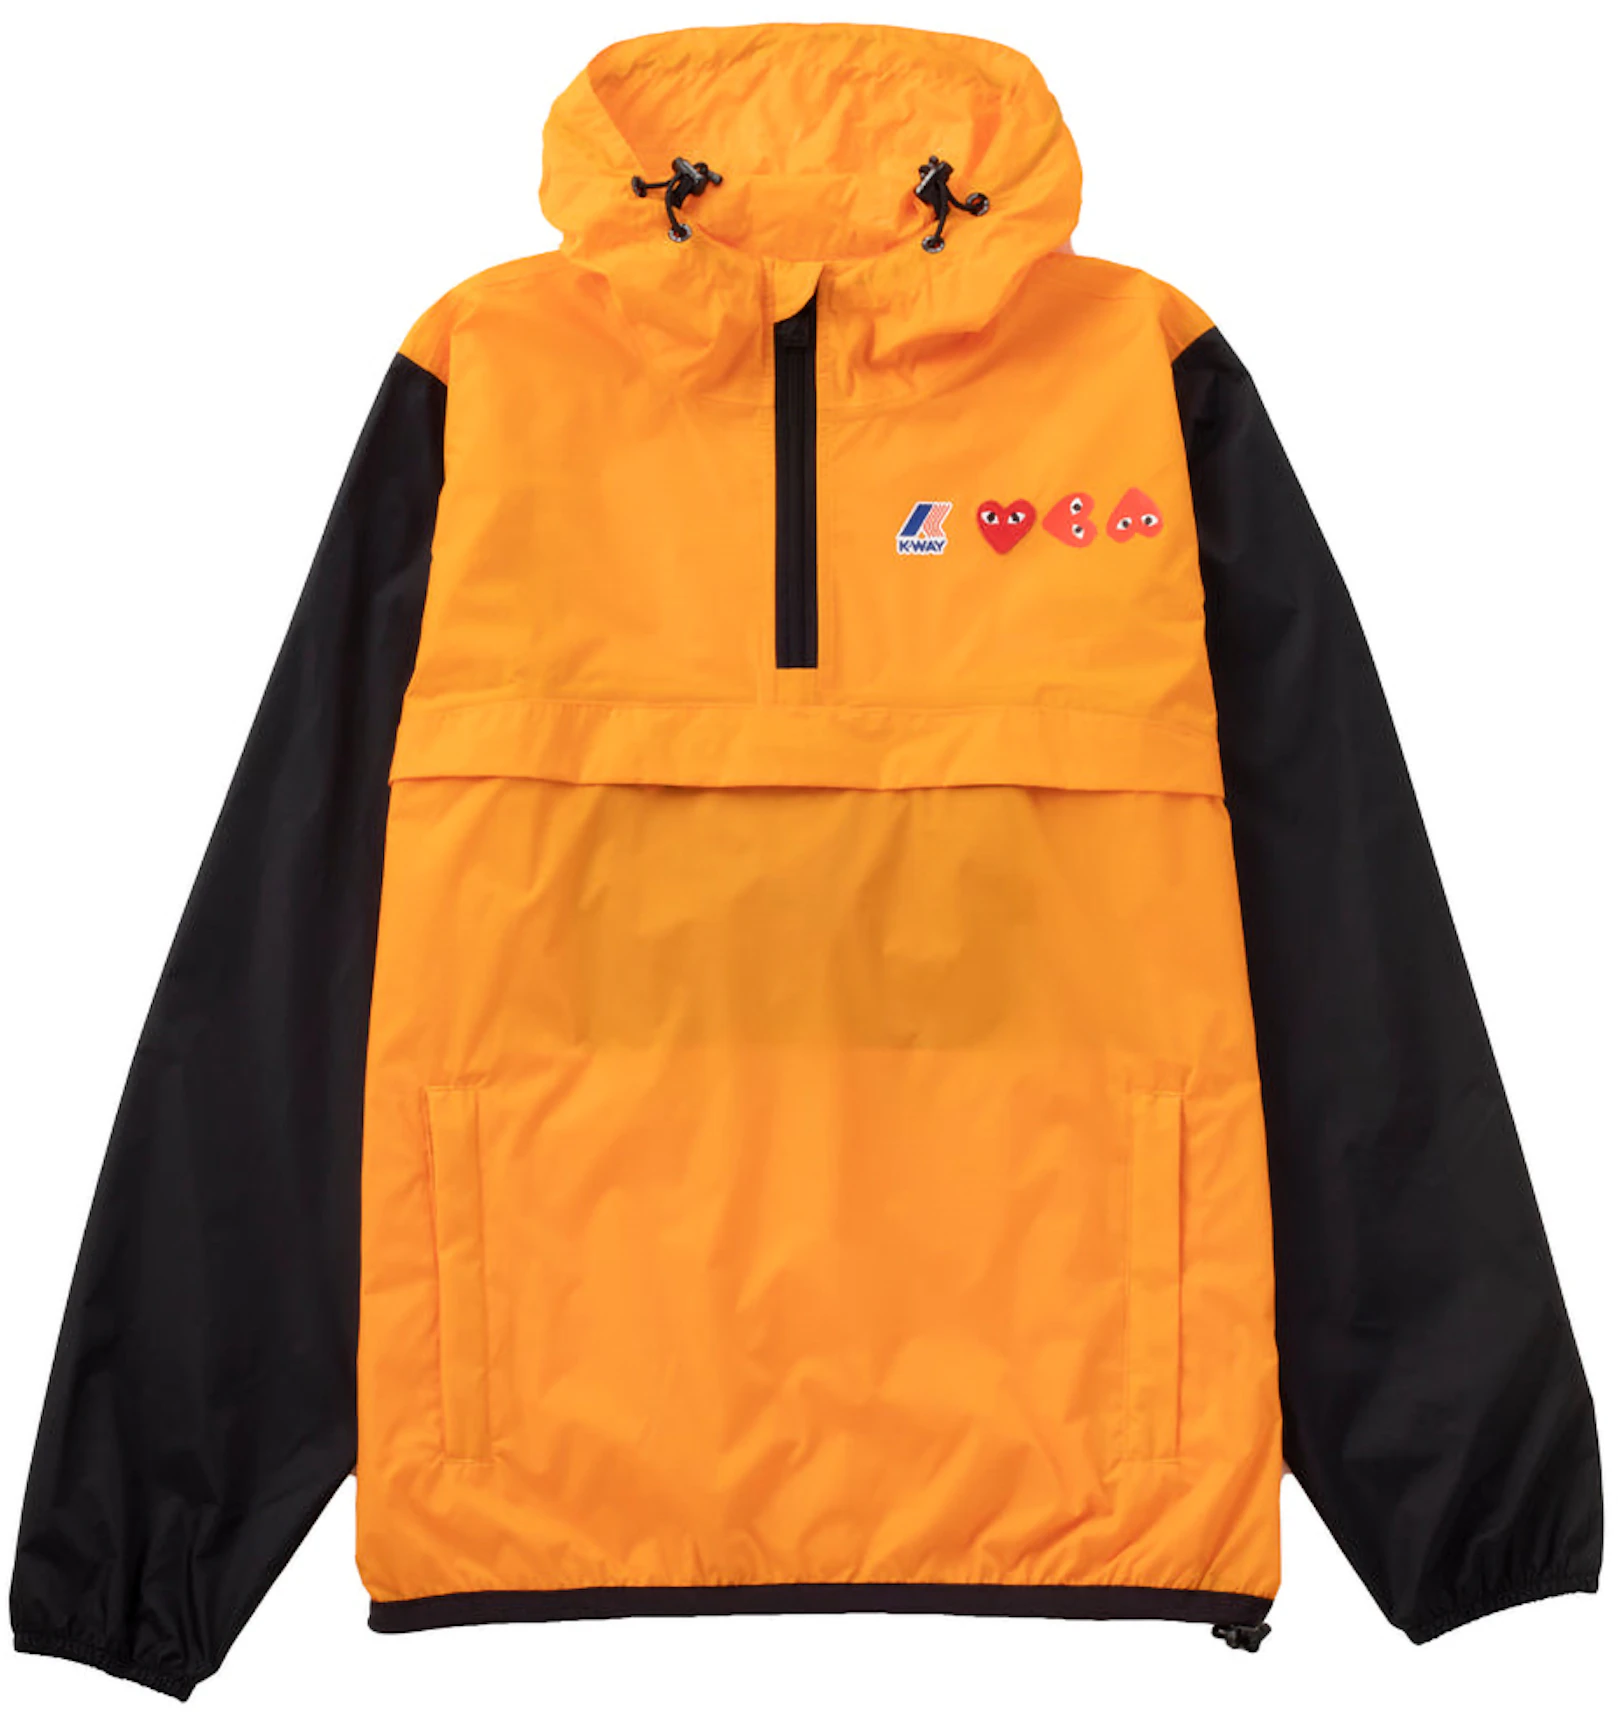 CDG Play x K-Way Logos Half Zip Jacket Orange Black - FW22 - MX